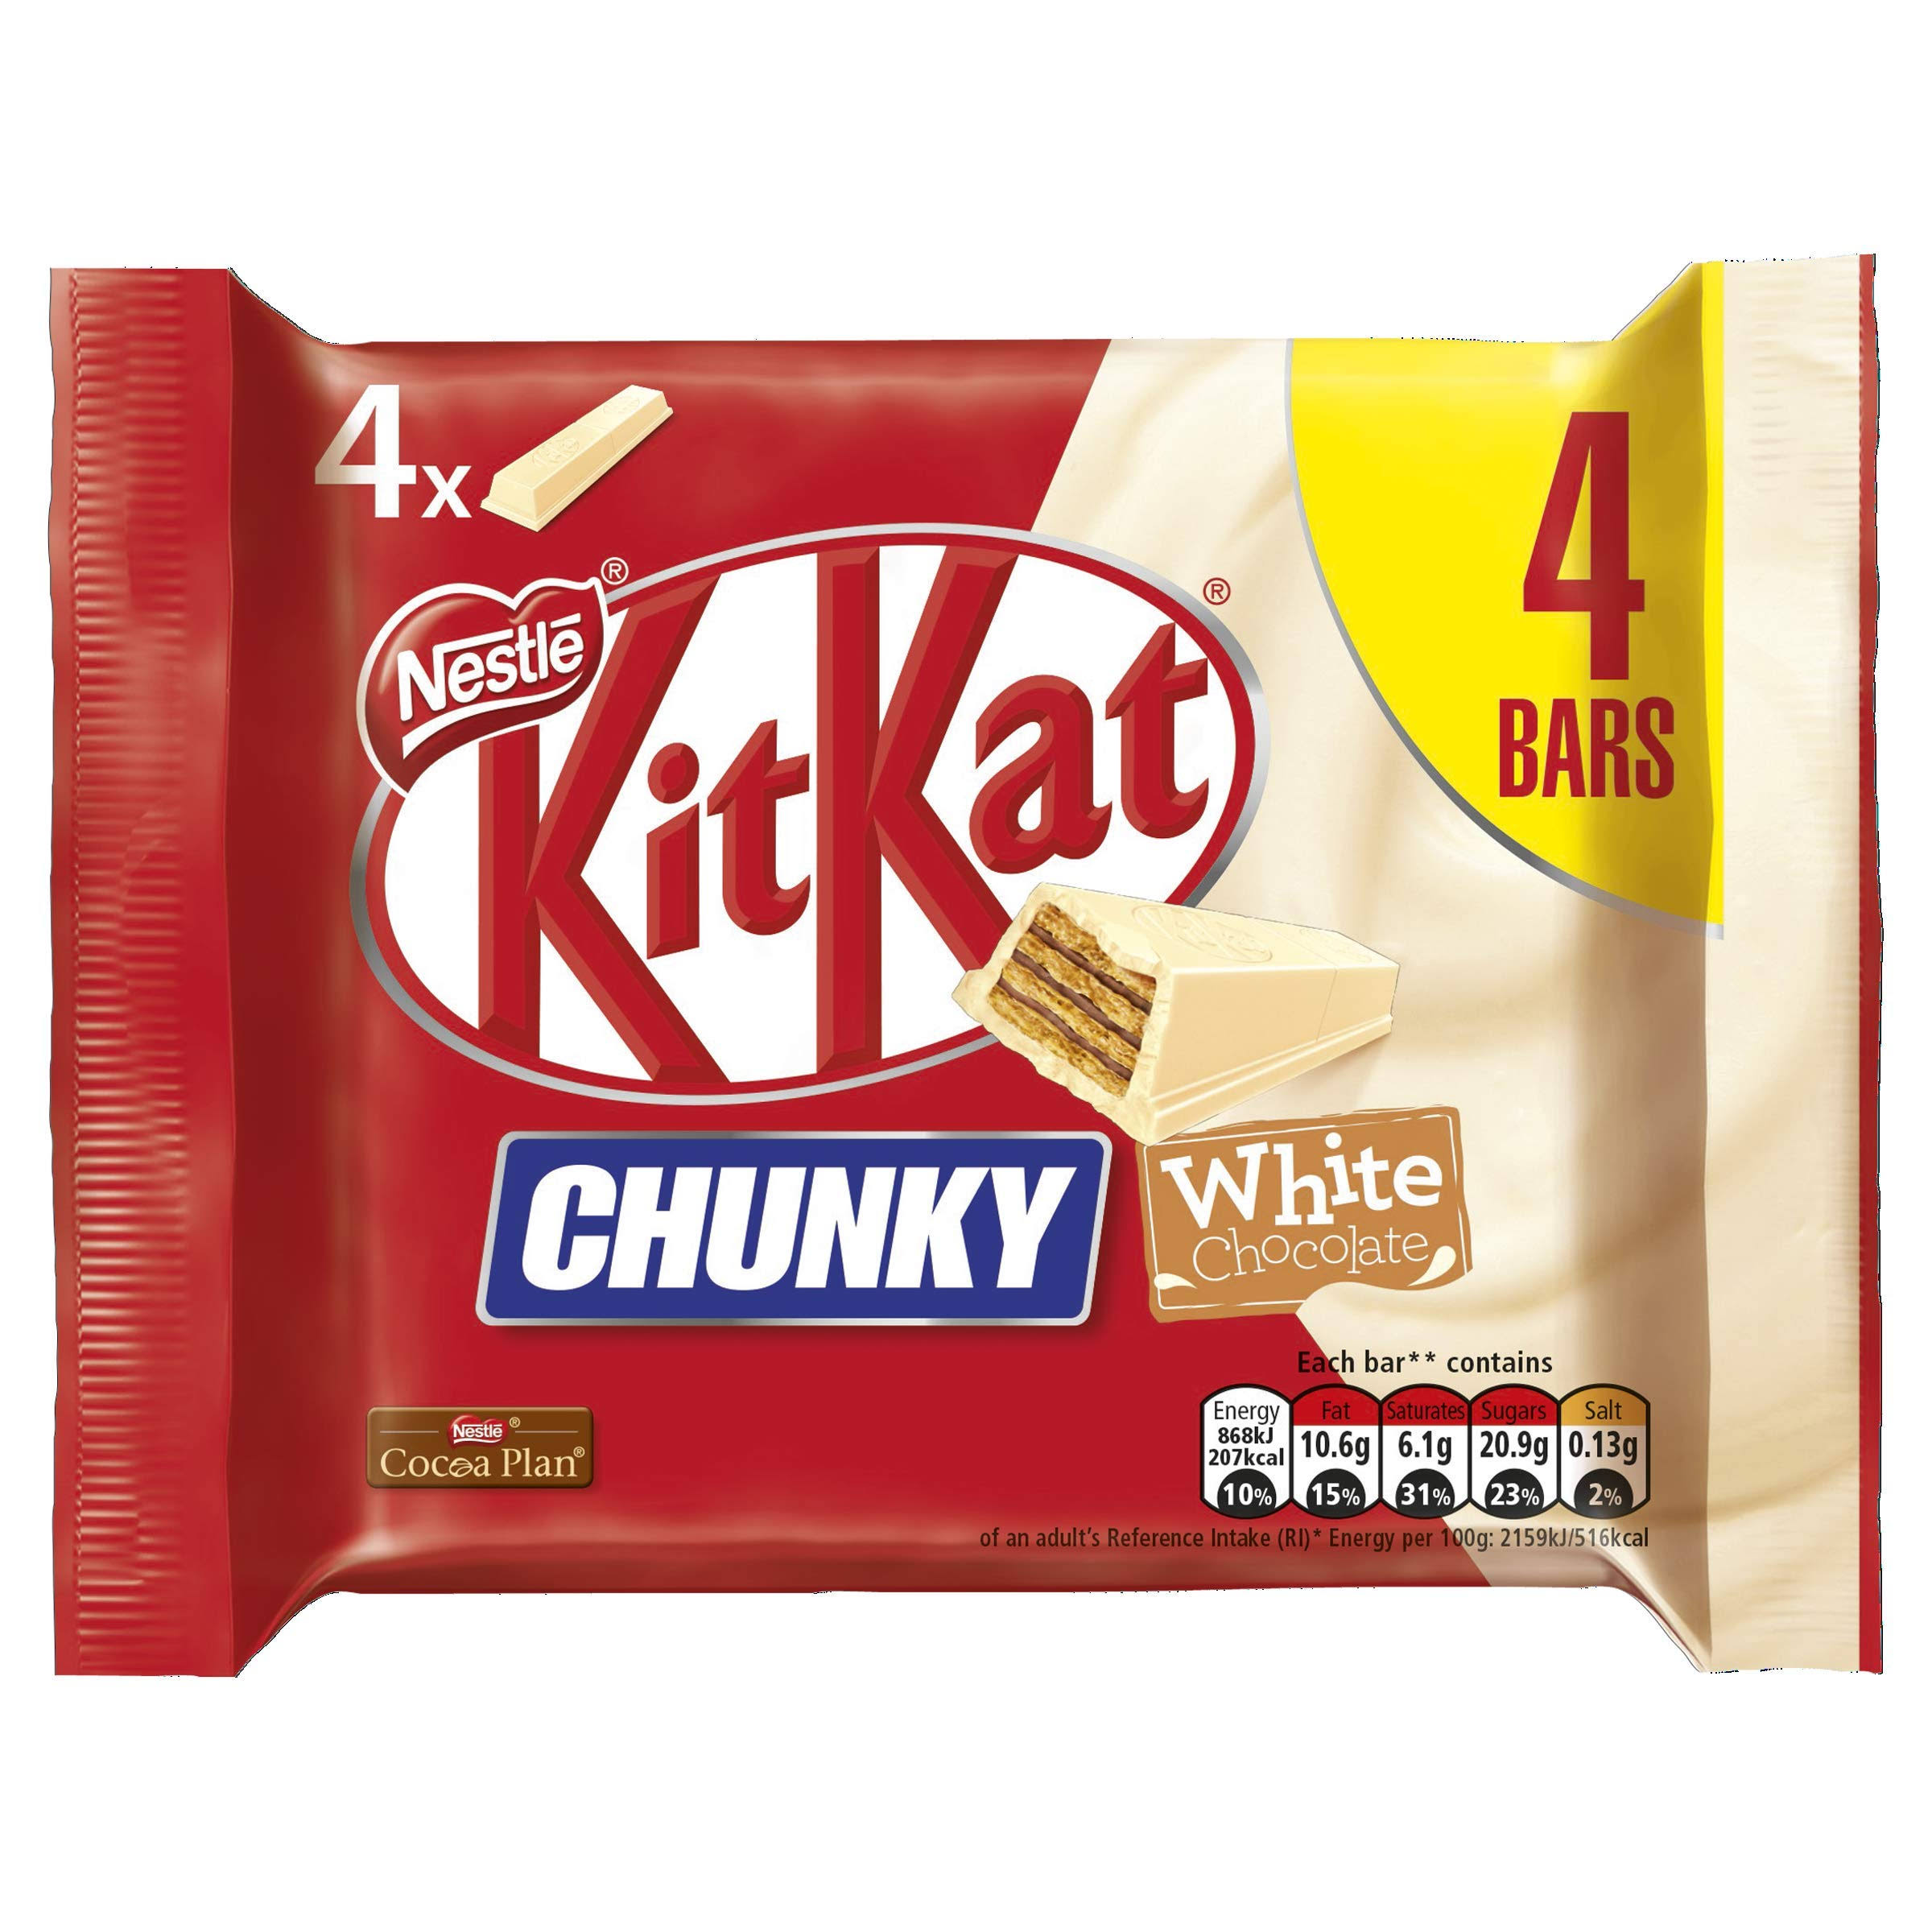 KitKat Chunky White Chocolate Bar Multipack 4 Pack